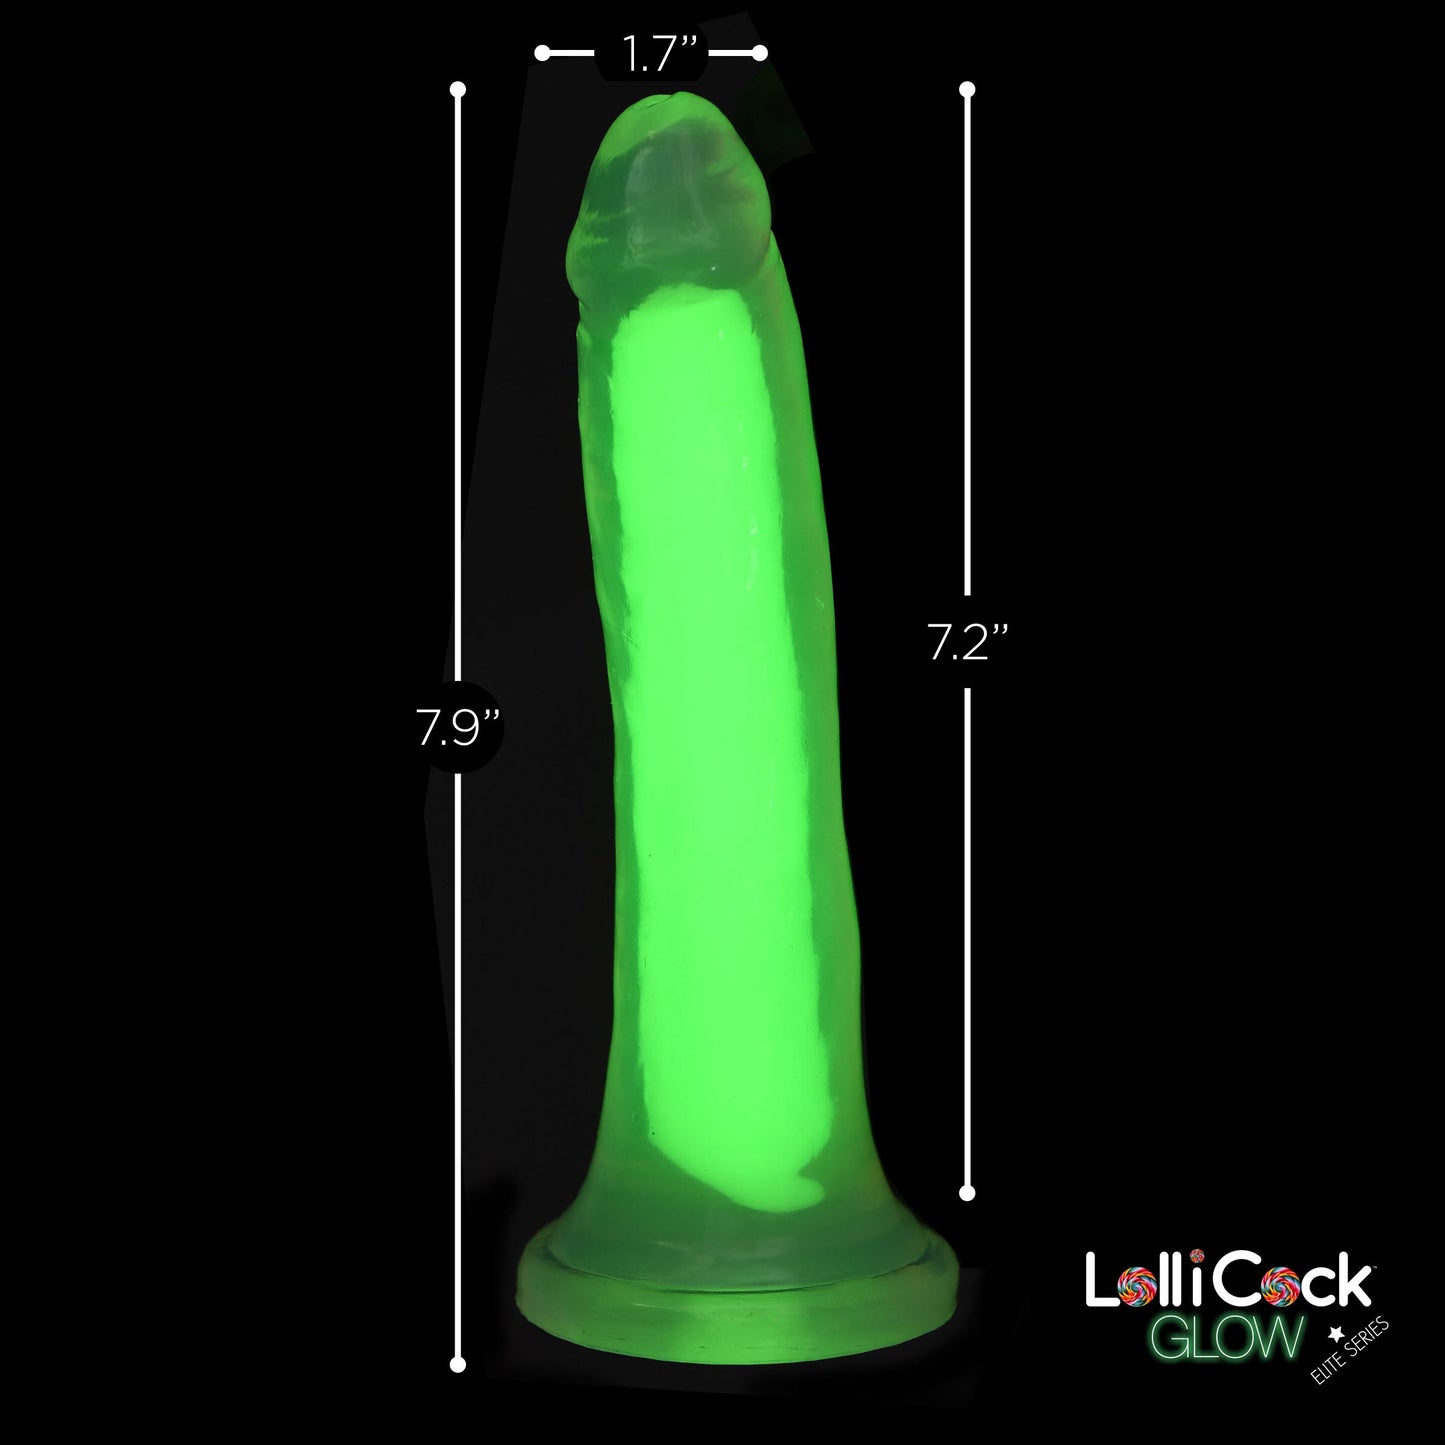 7 Inch Glow-in-the-Dark Silicone Dildo - Green